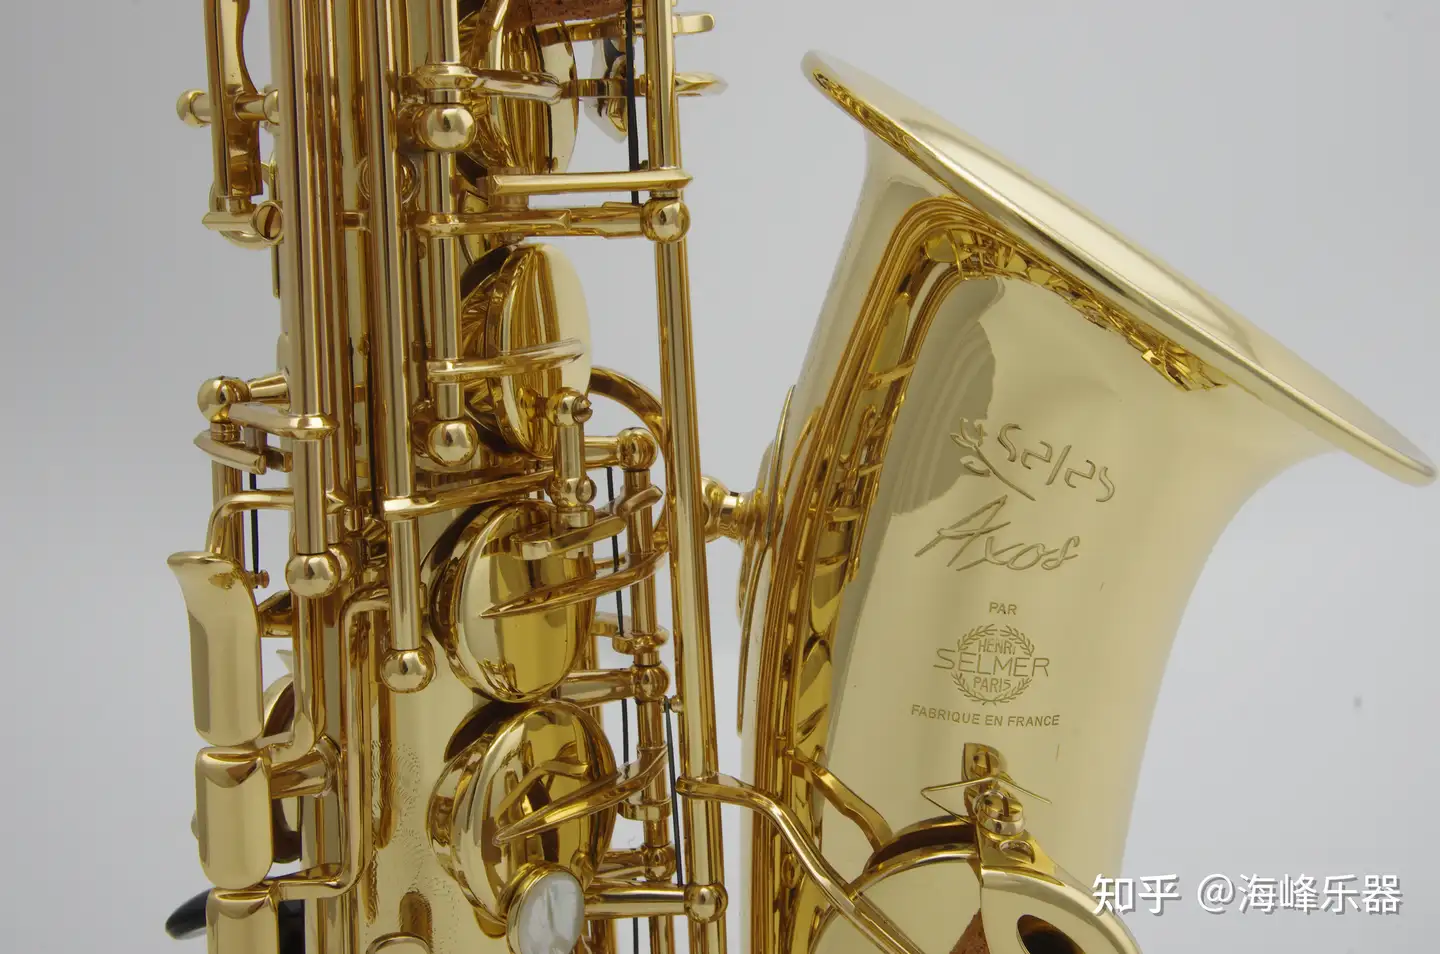 Axos tenor saxophone - Henri SELMER Paris